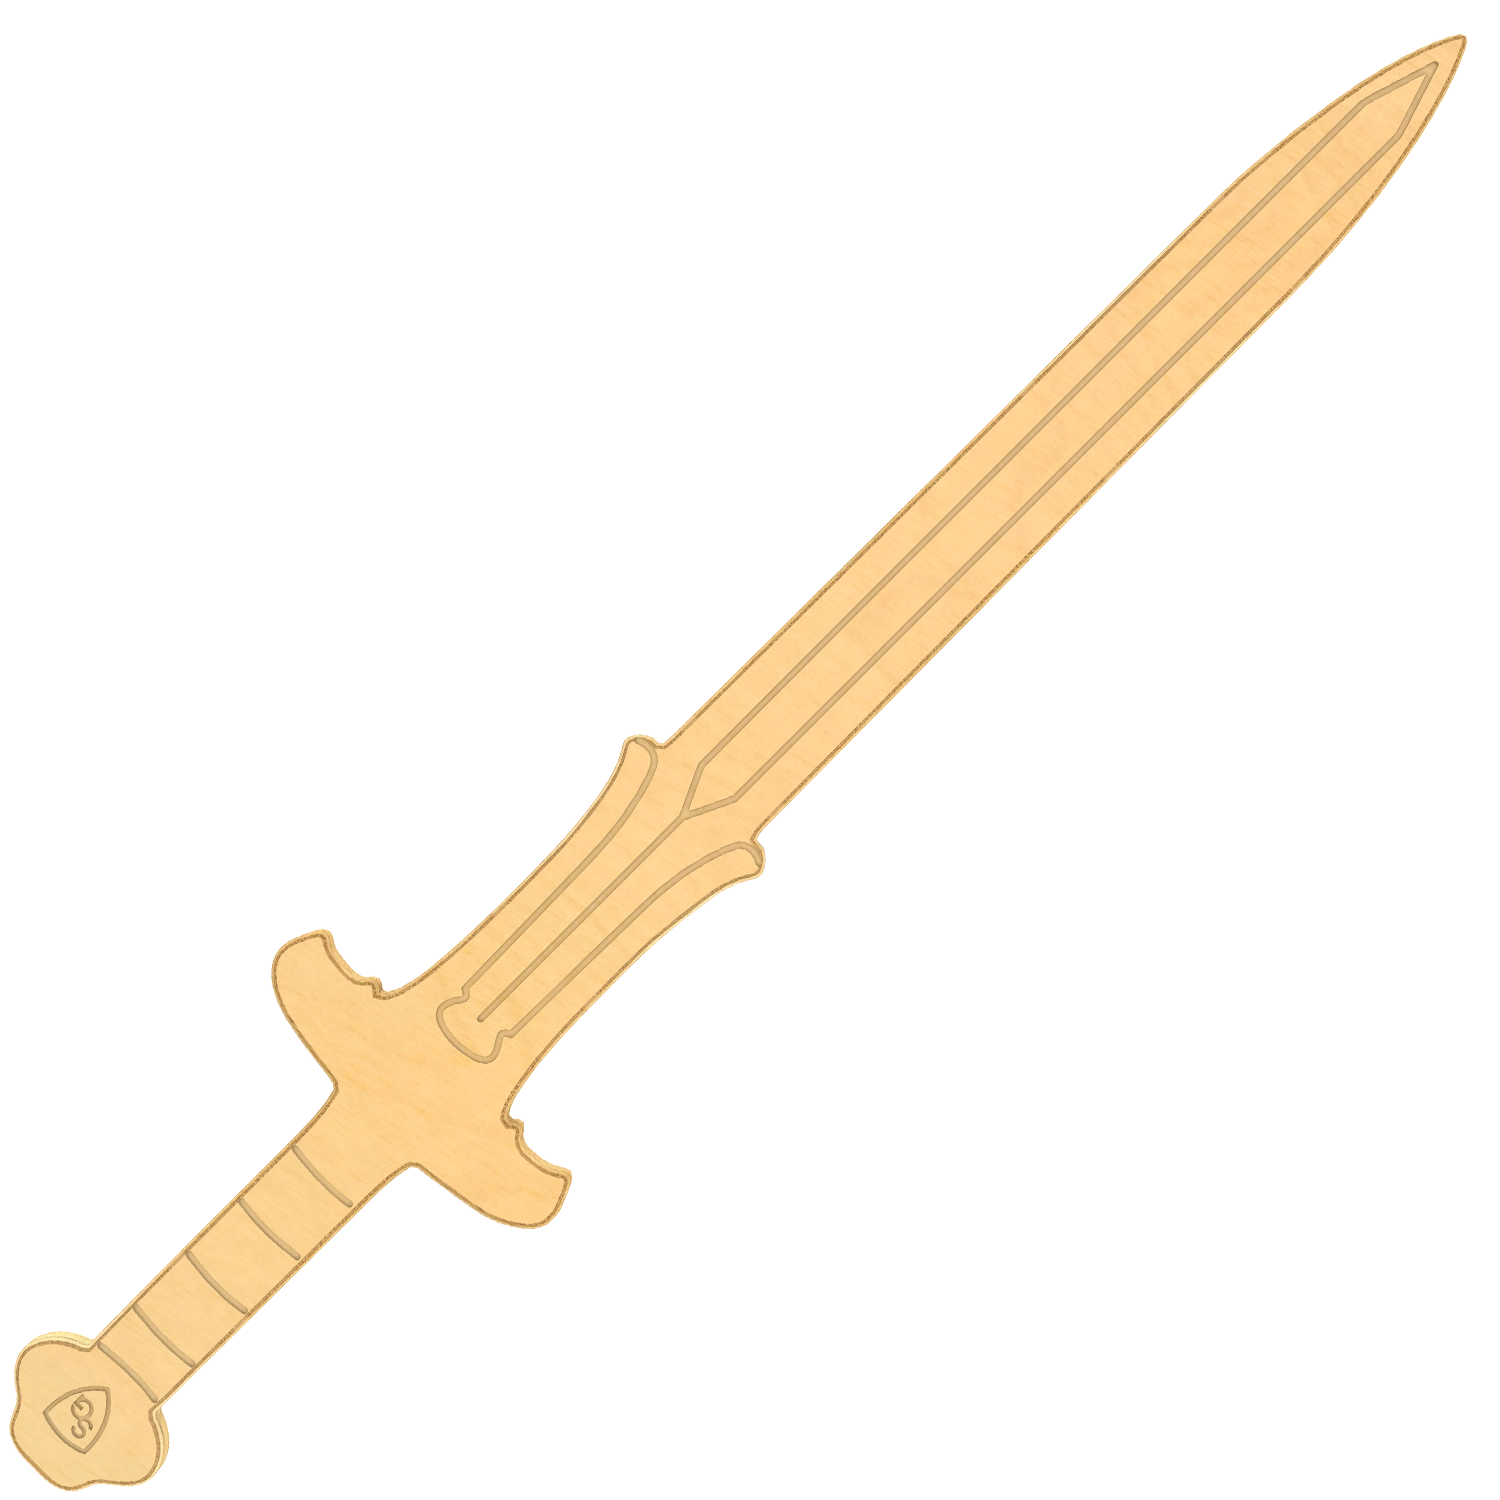 Heroic Sword